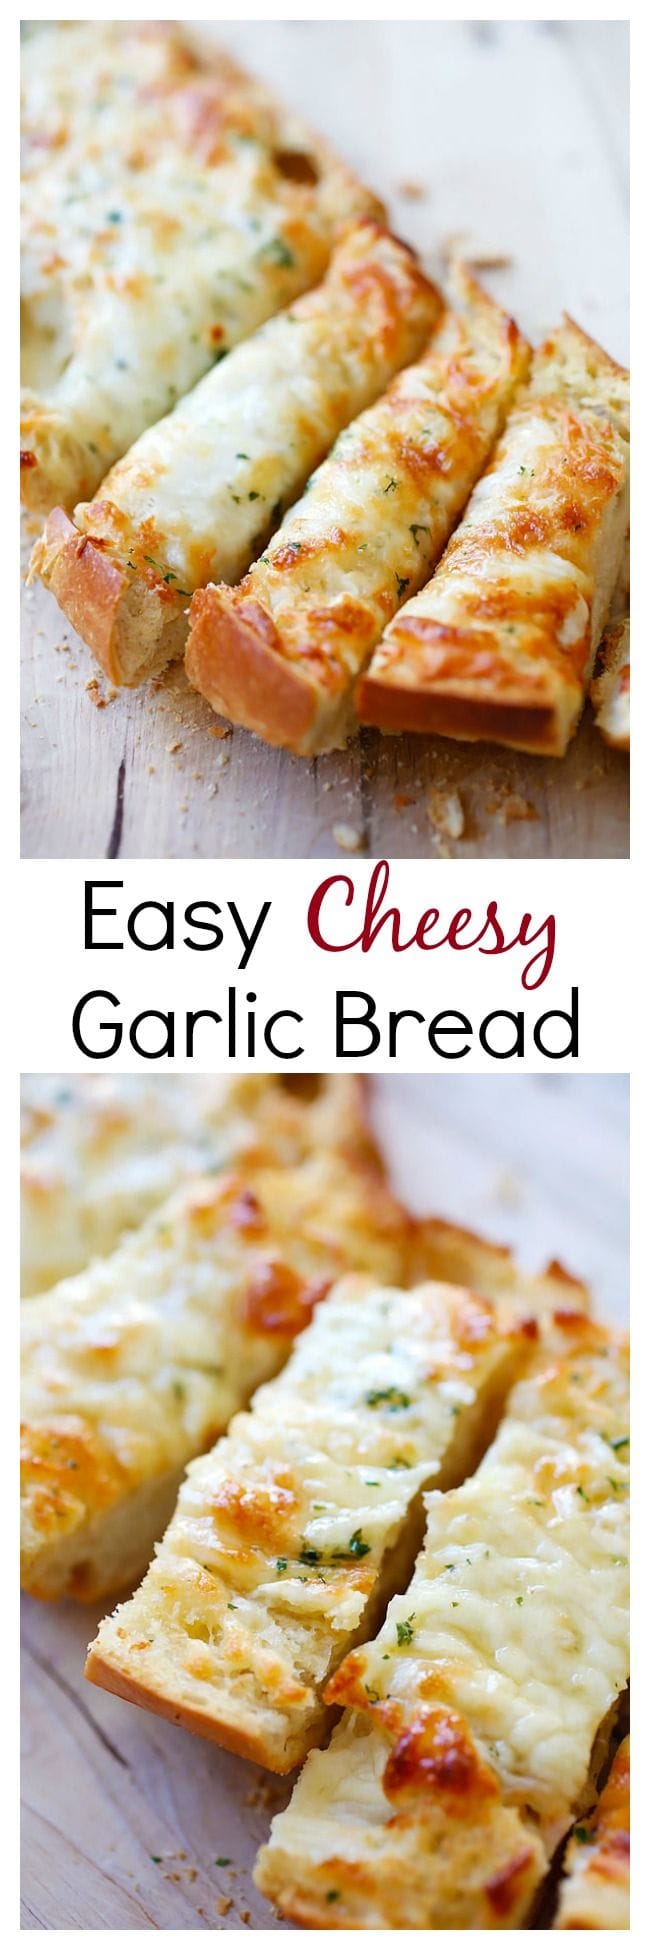 Easy Cheesy Garlic Bread – Turn regular Italian bread into buttery & cheesy garlic bread with this super easy recipe that takes only 20 mins | rasamalaysia.com